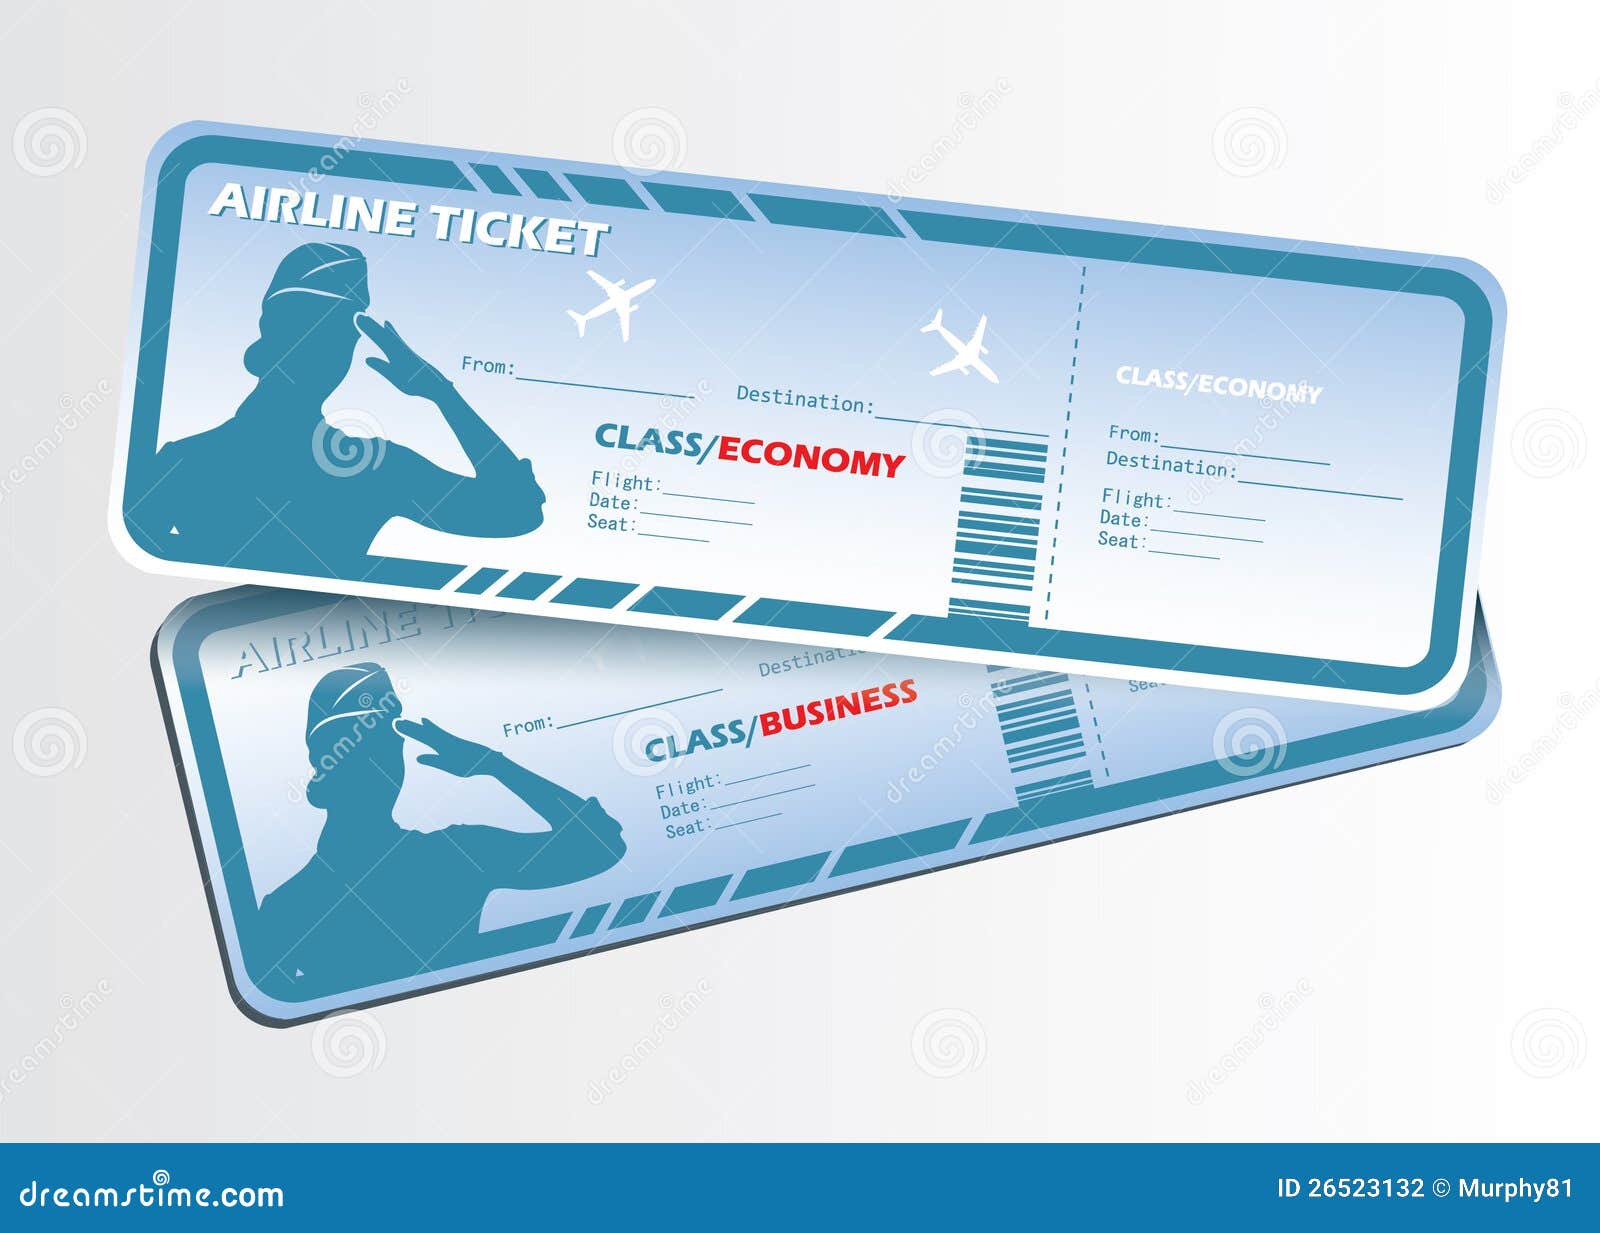 clipart plane ticket - photo #20